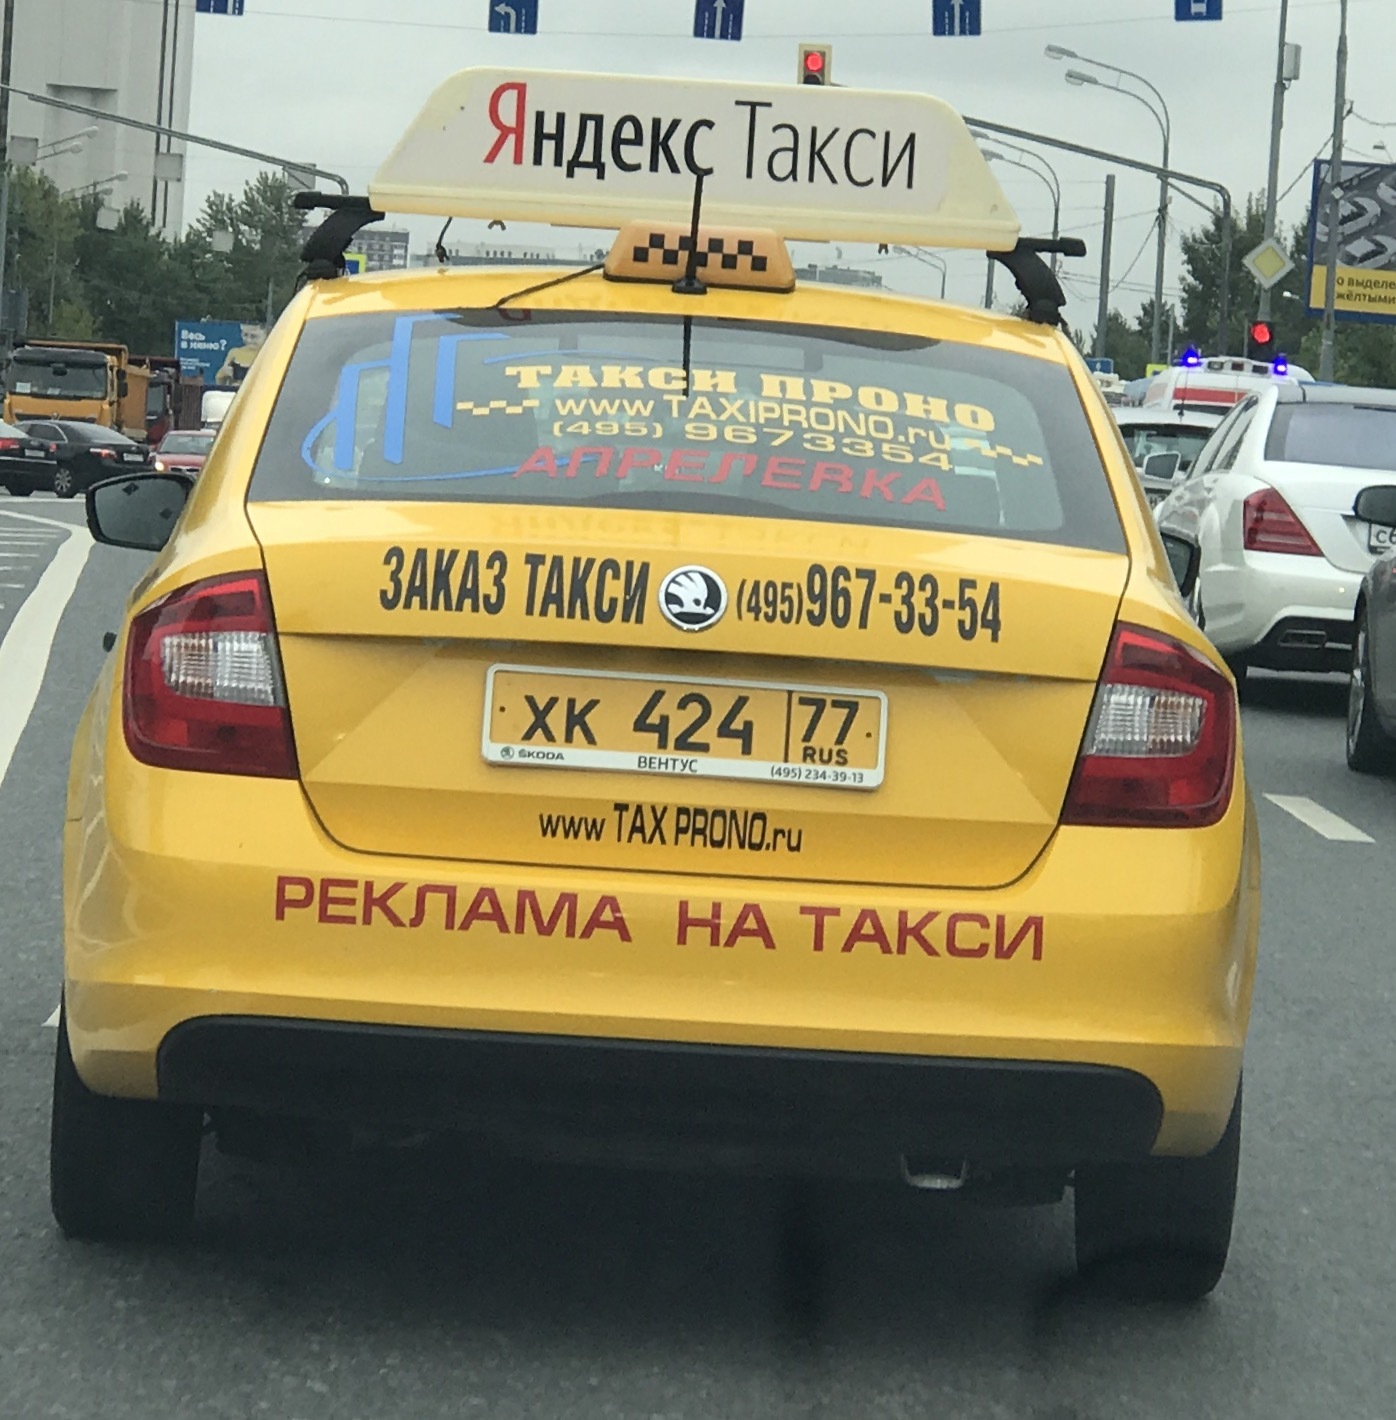 Такси клевое. Такси. Такси прикол. Надпись такси.